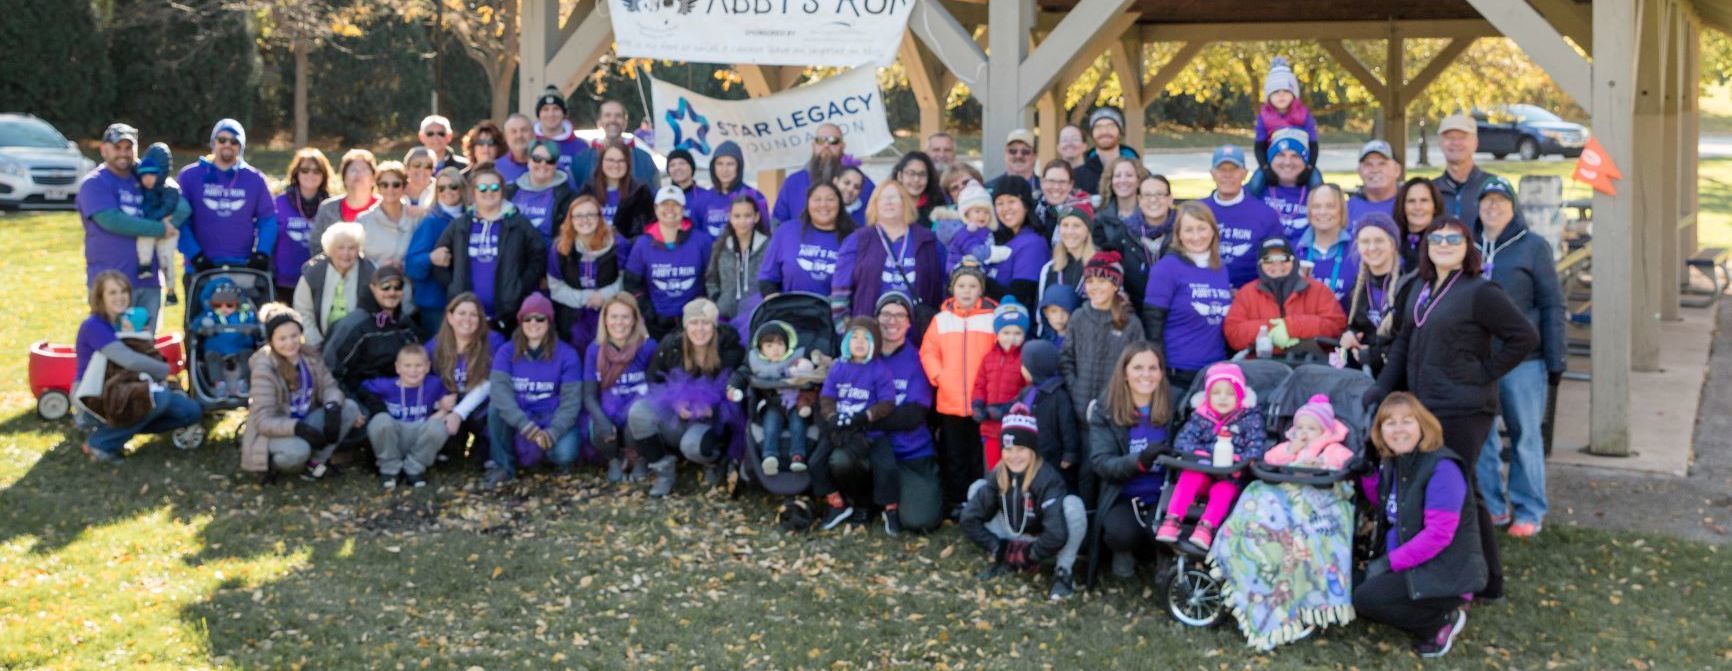 10th Annual Abby's Run - Milwaukee